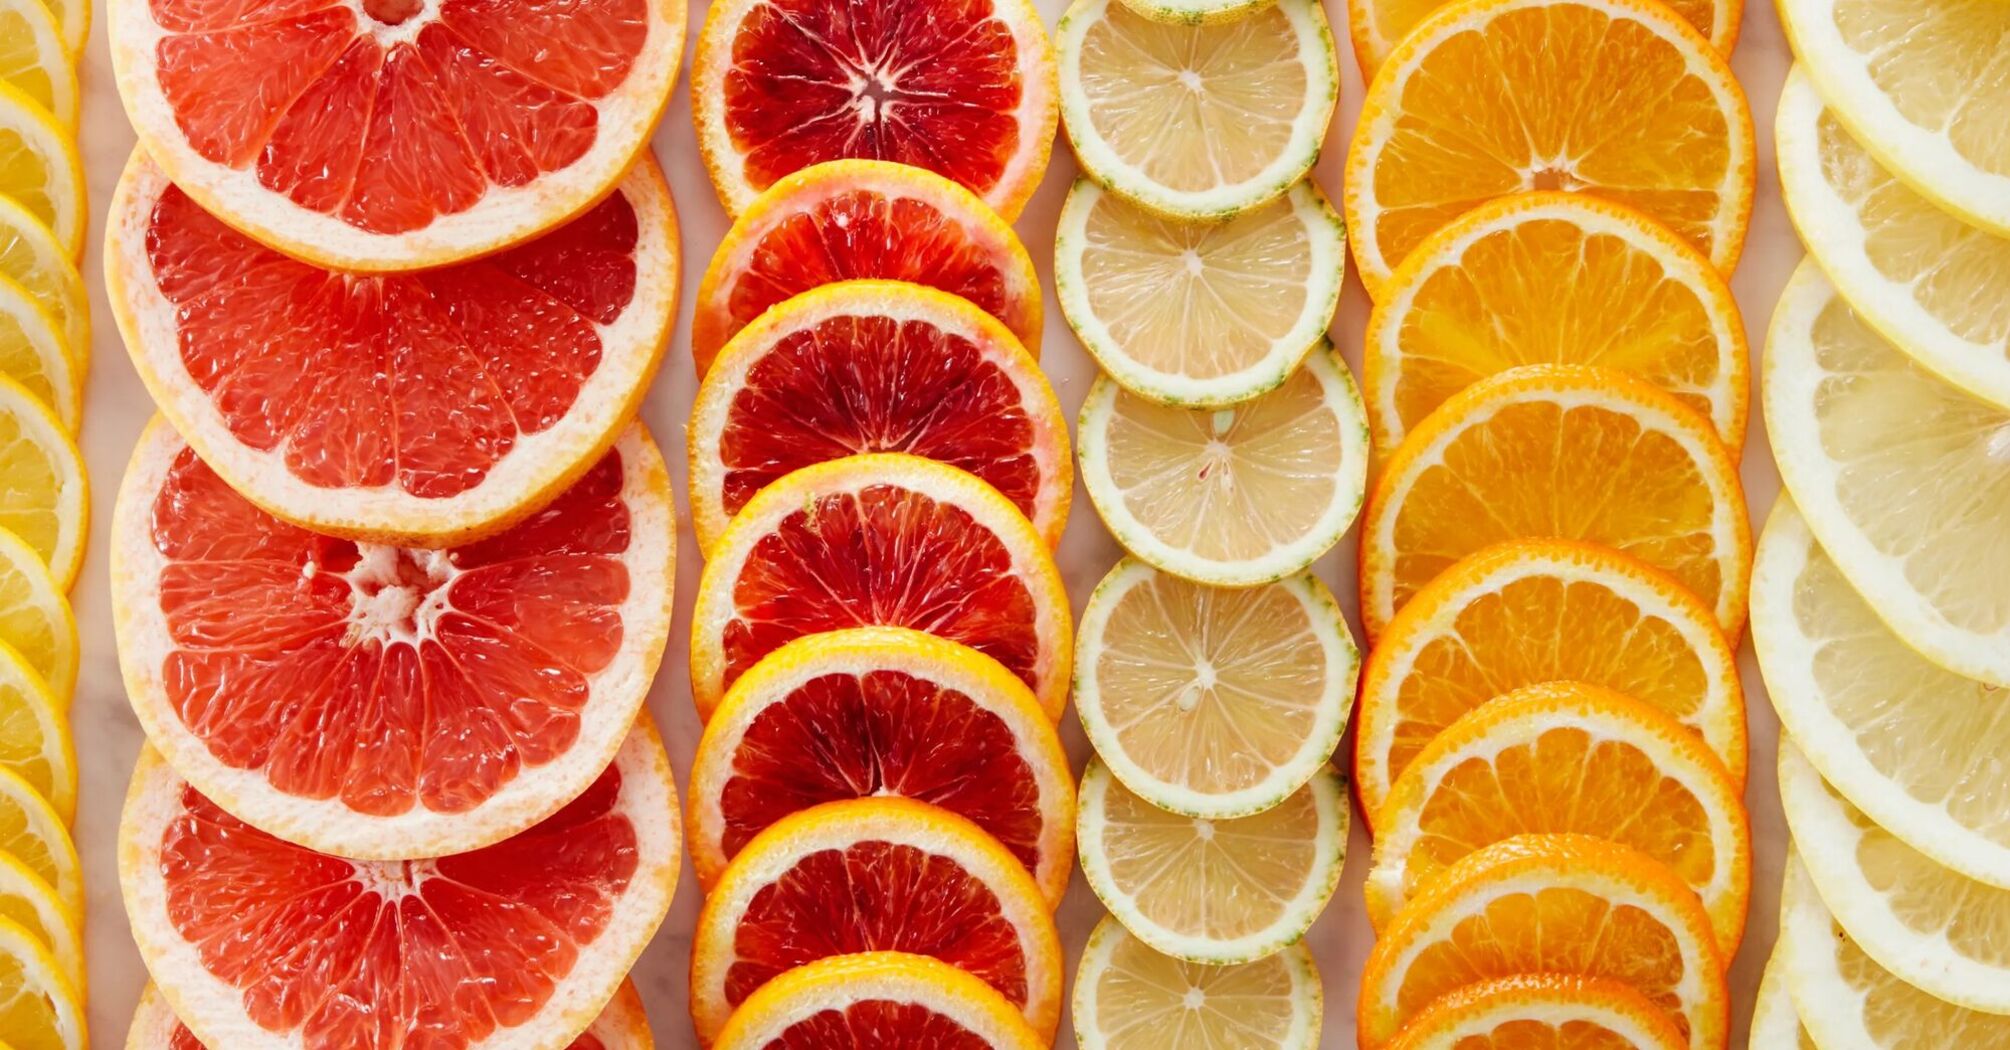 Citrus Fruit and Juices